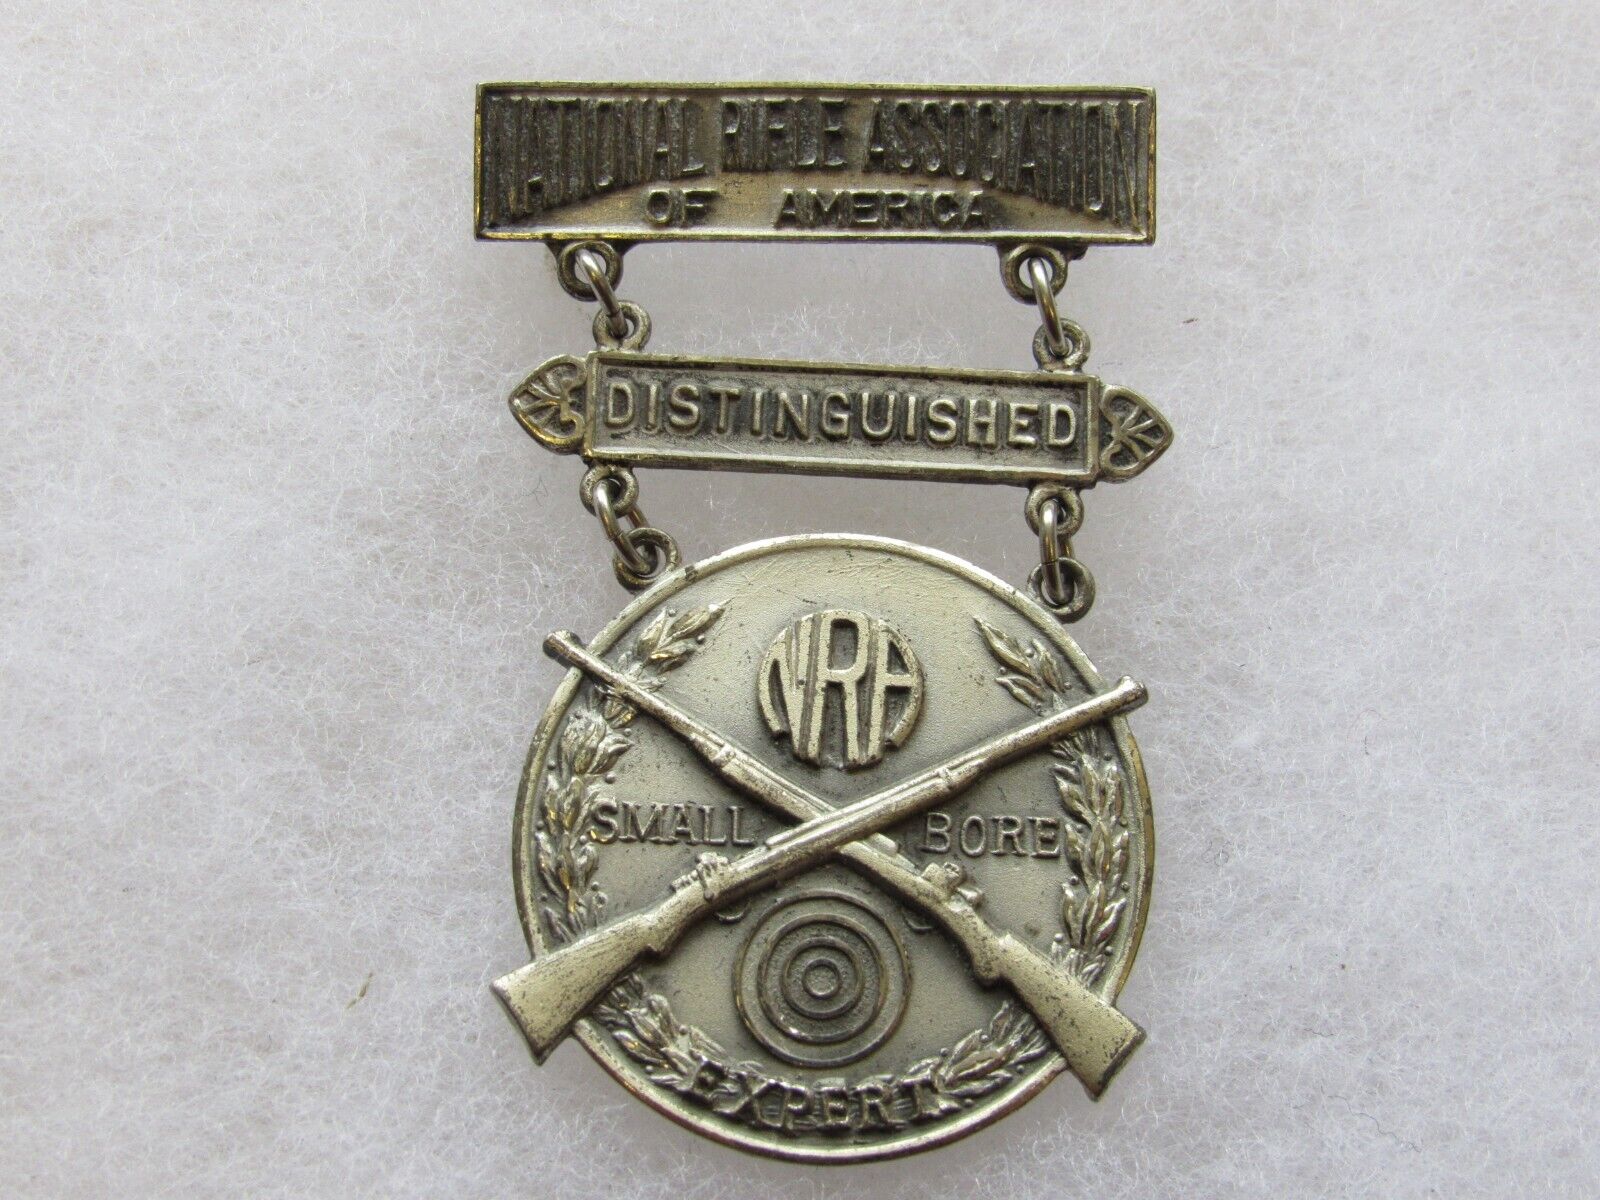 Vintage Sterling Silver NRA Distinguished Small Bore Expert Marksmanship Badge